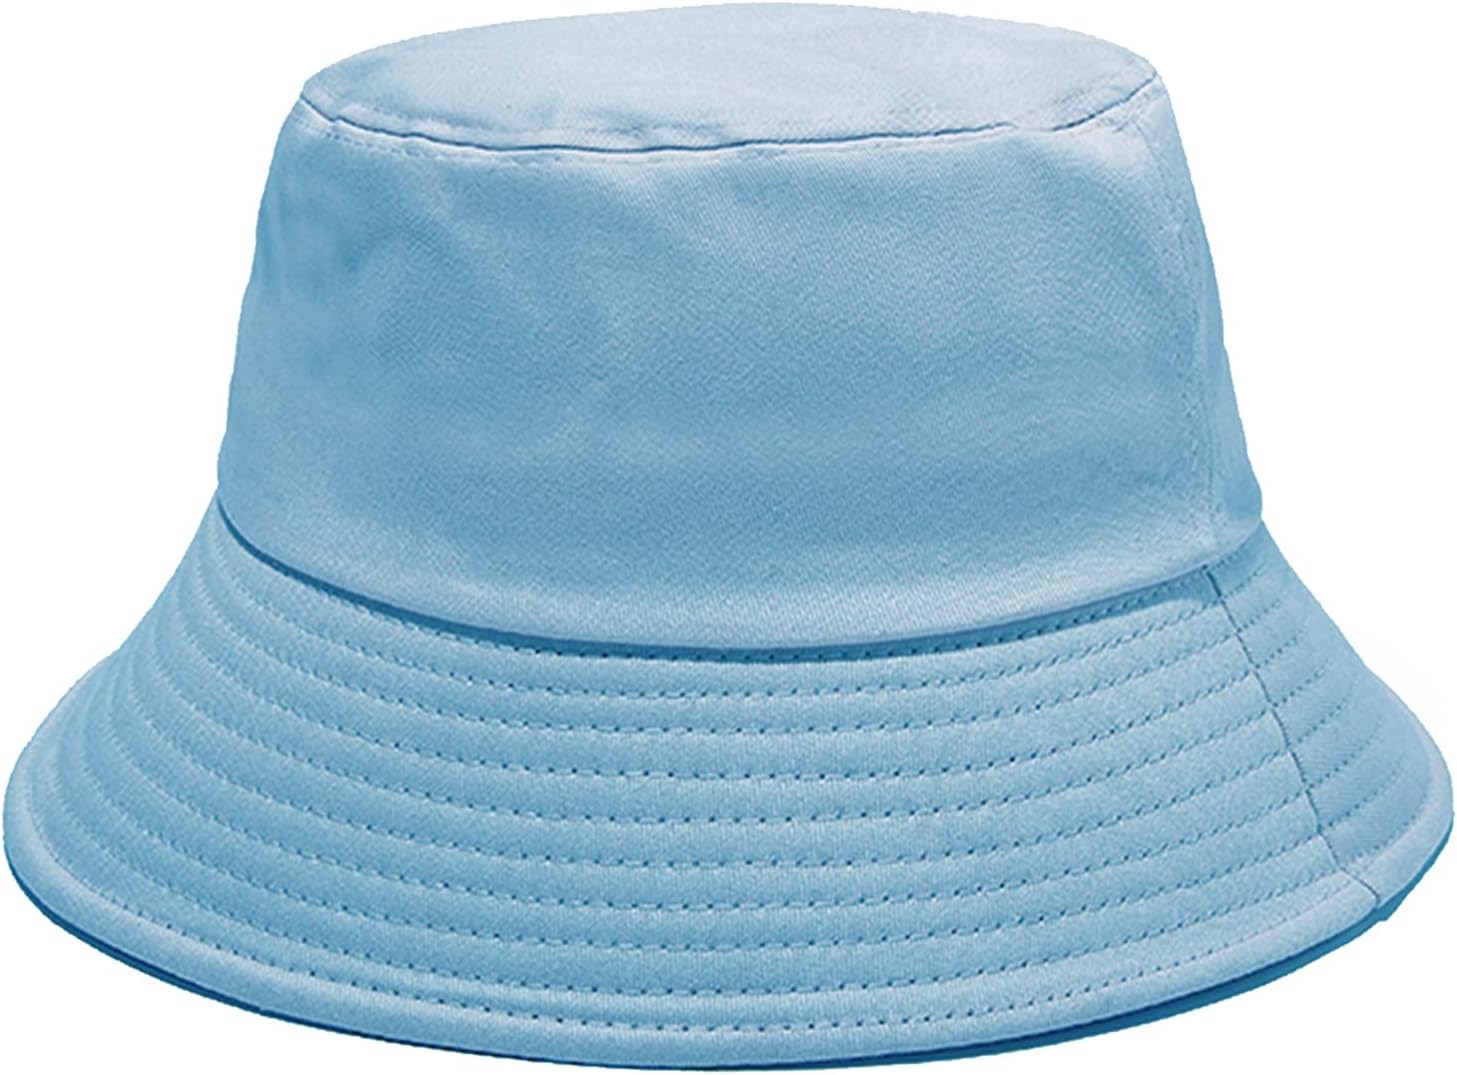 NPJY Bucket Hat for Women Men Cotton Summer Sun Beach Fishing Cap